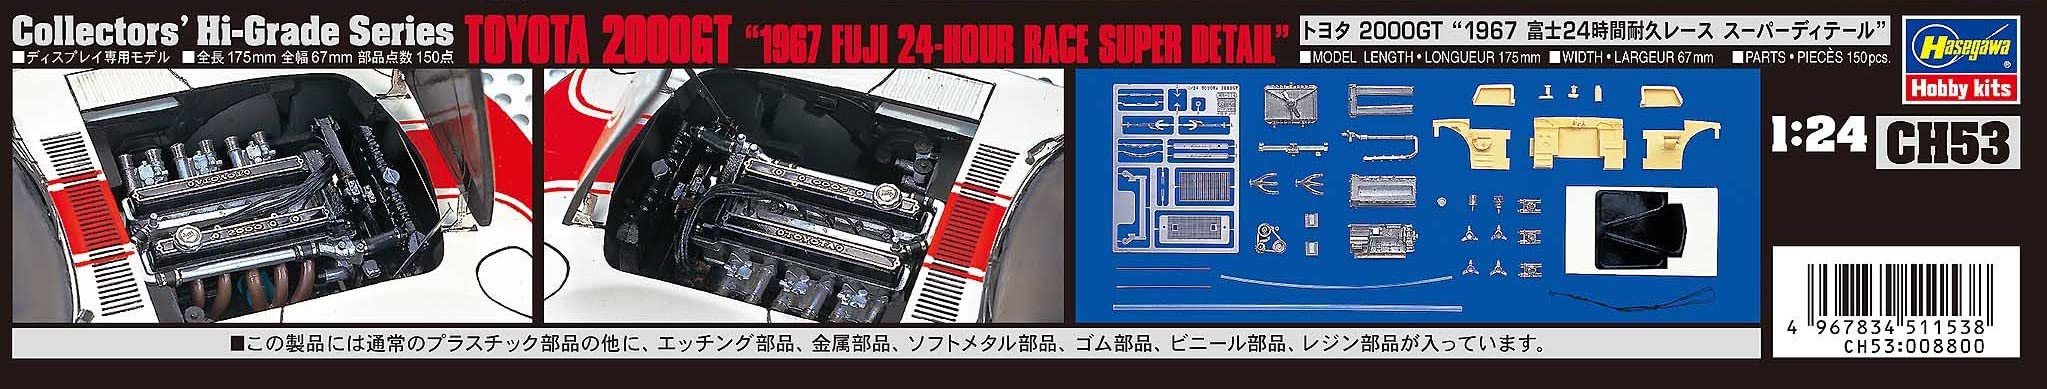 Hasegawa 1/24 Toyota 2000Gt 1967 Fuji 24Hr Race Super Detail Japanese Model Kit